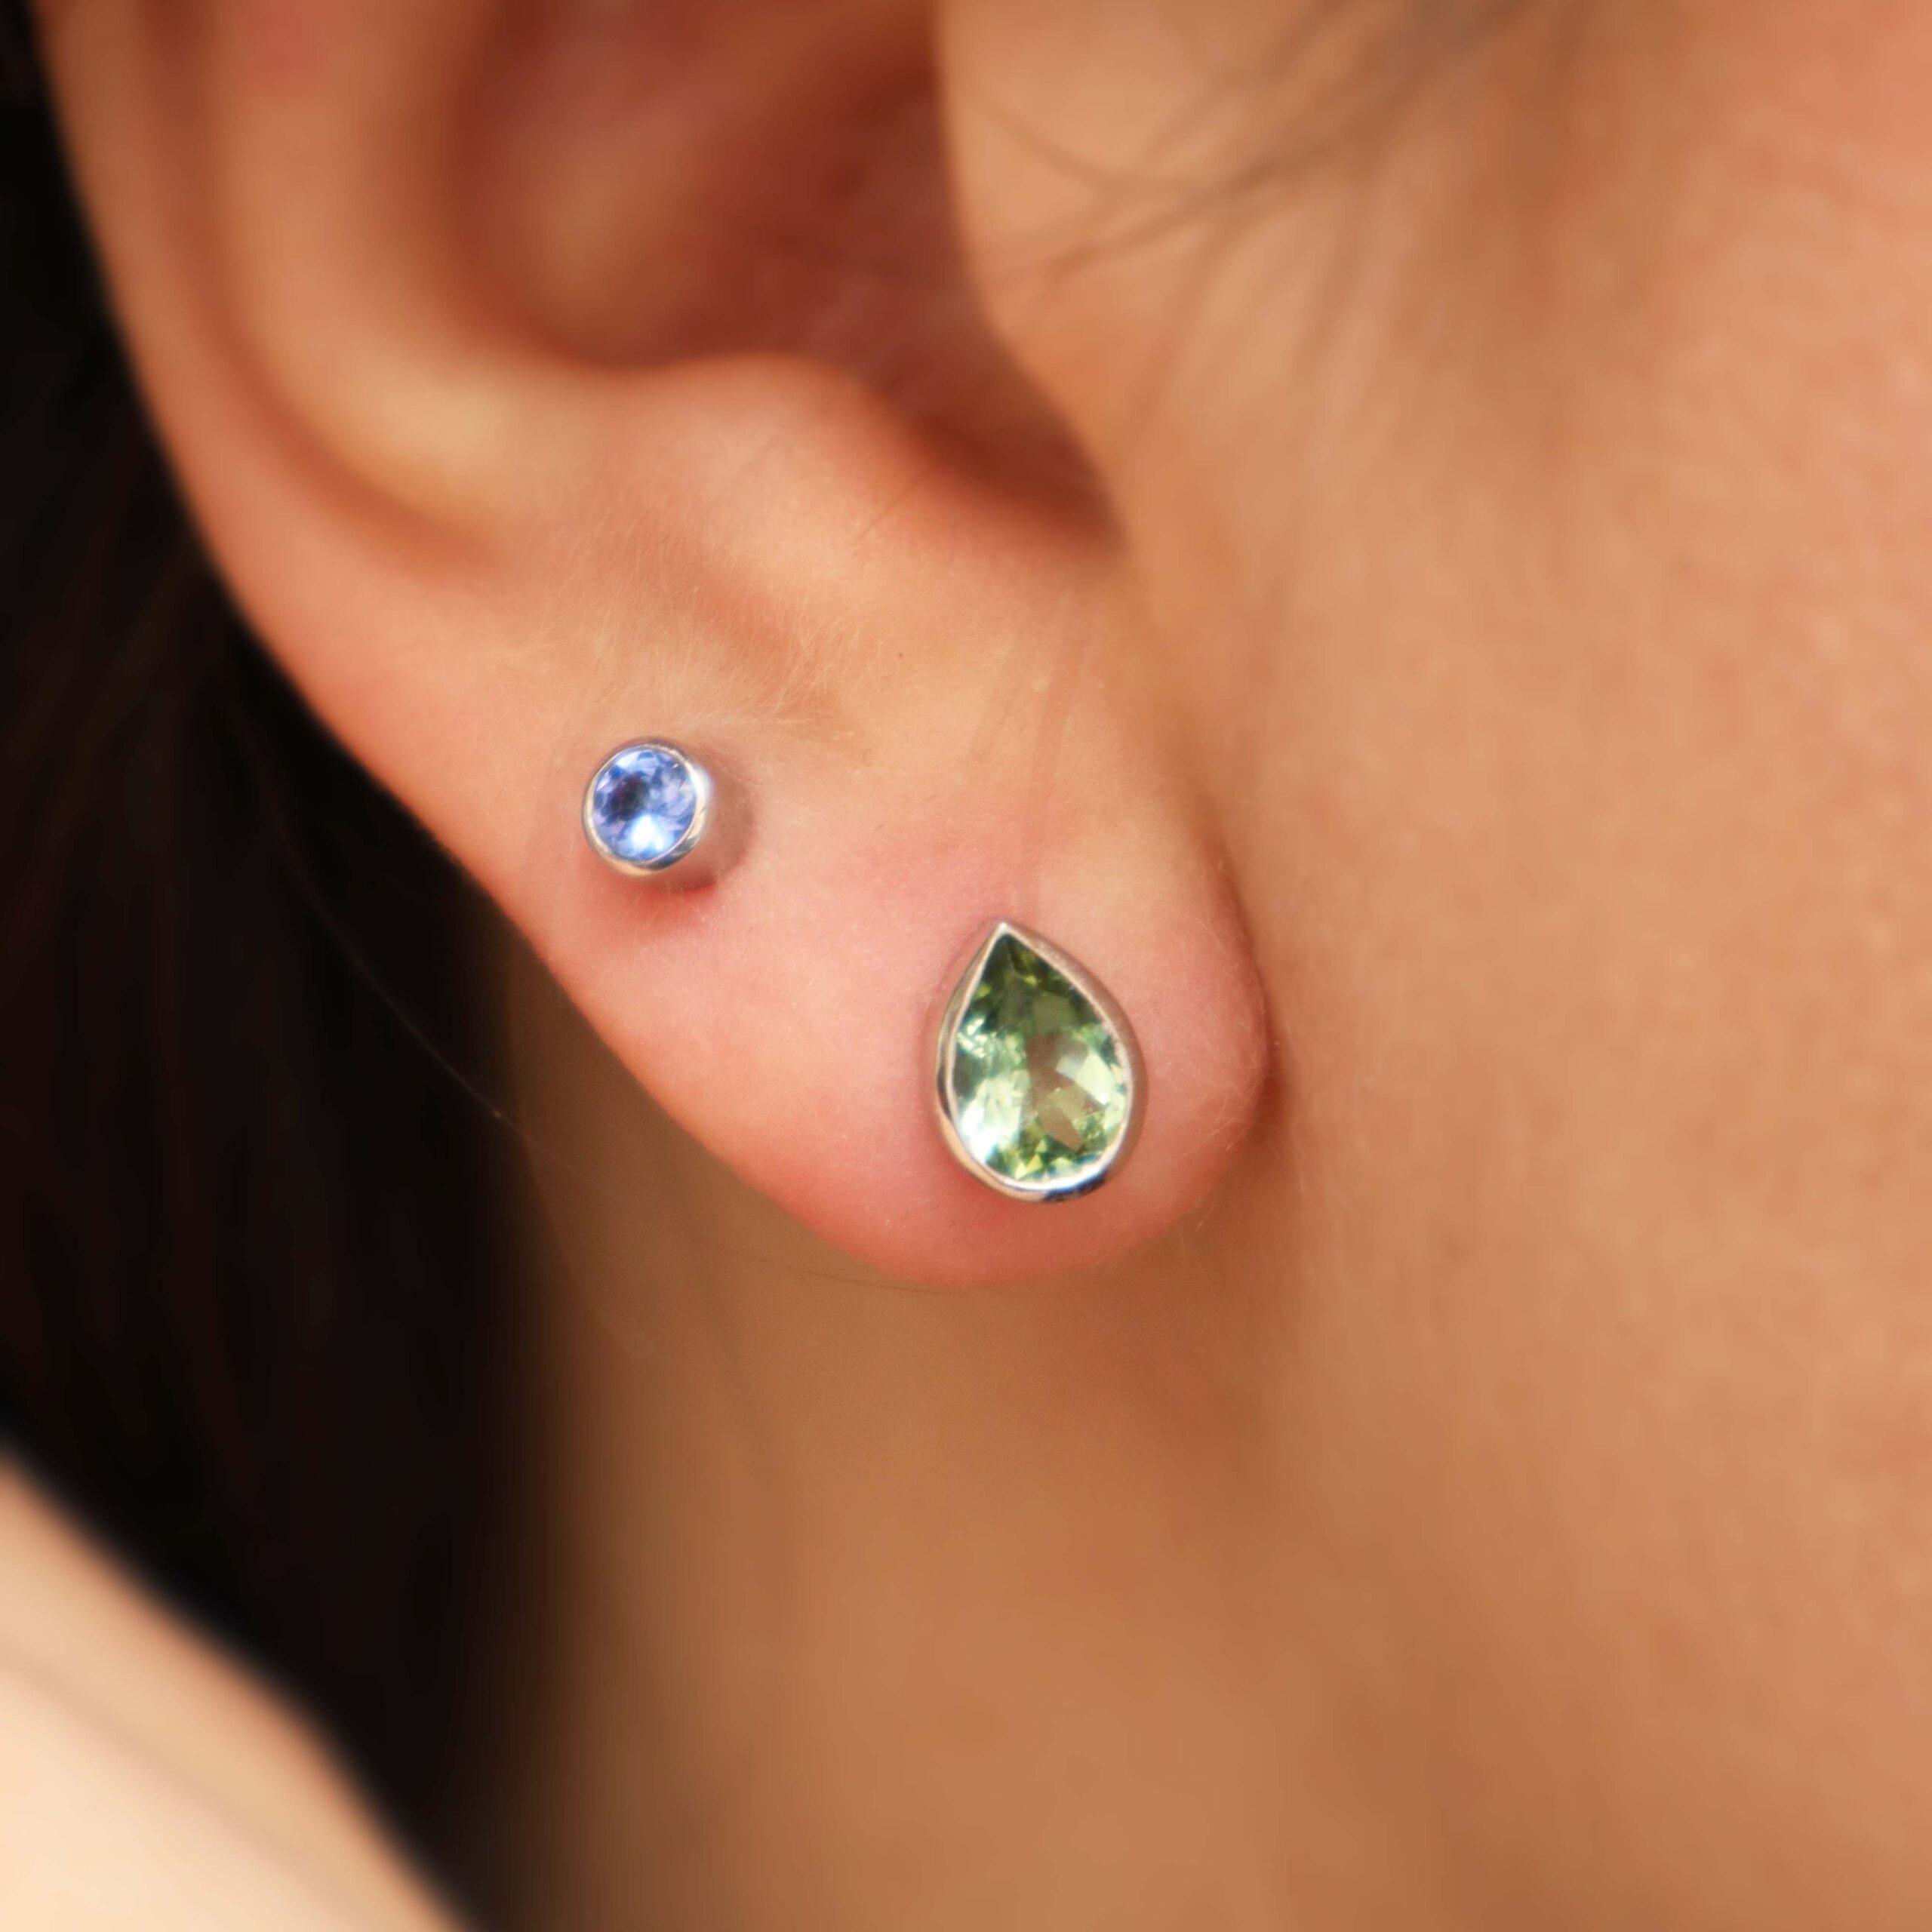 Green tourmaline earrings in white gold